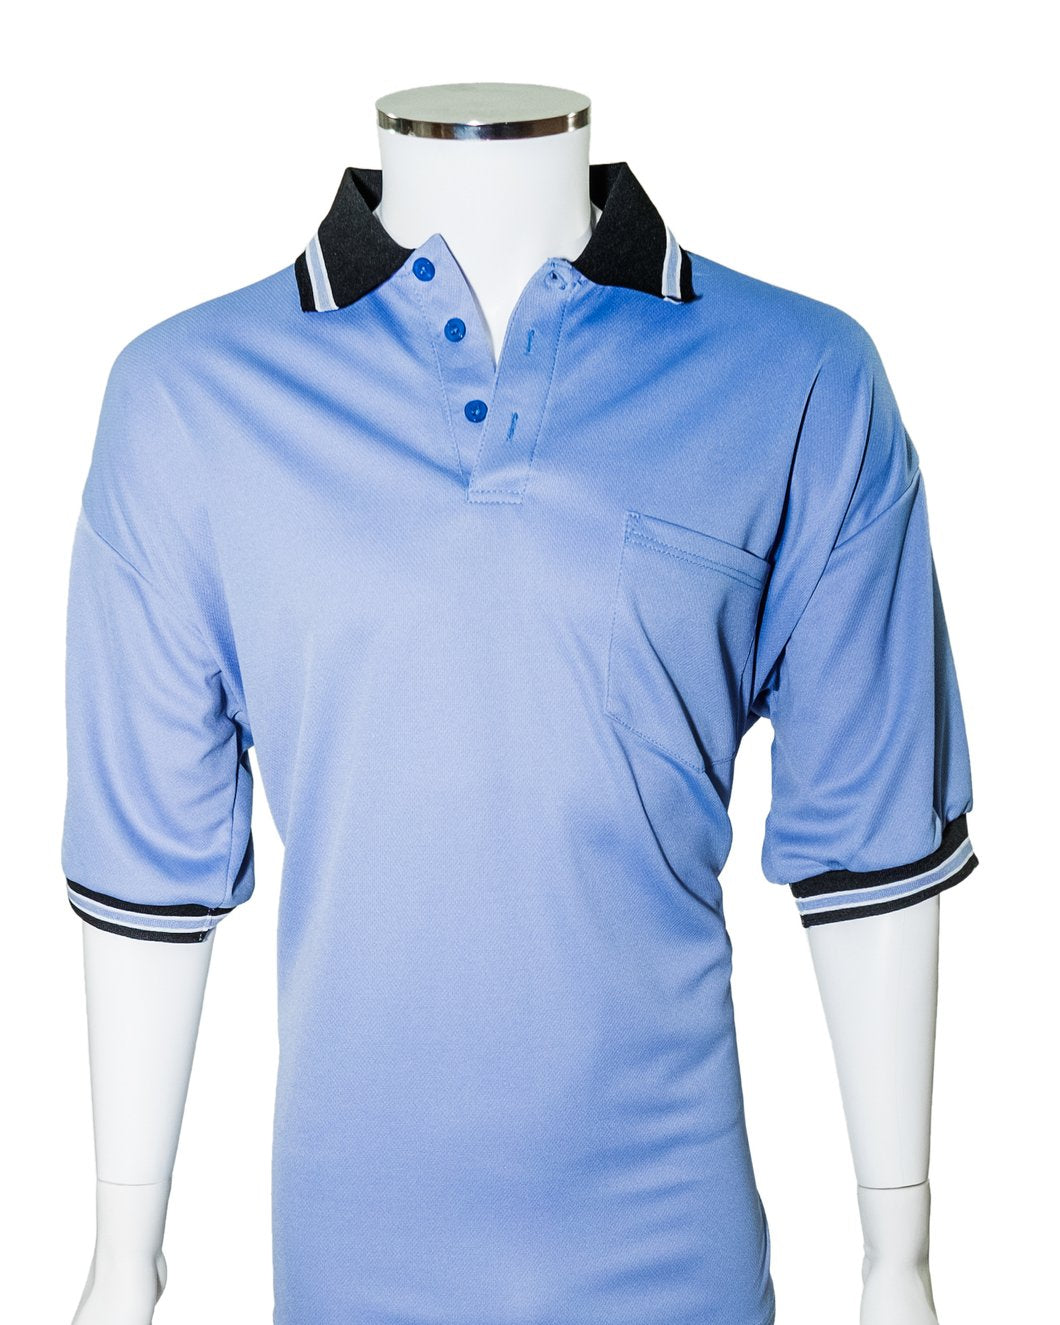 Major League Umpire Shirt - Polo Blue - Officials Depot